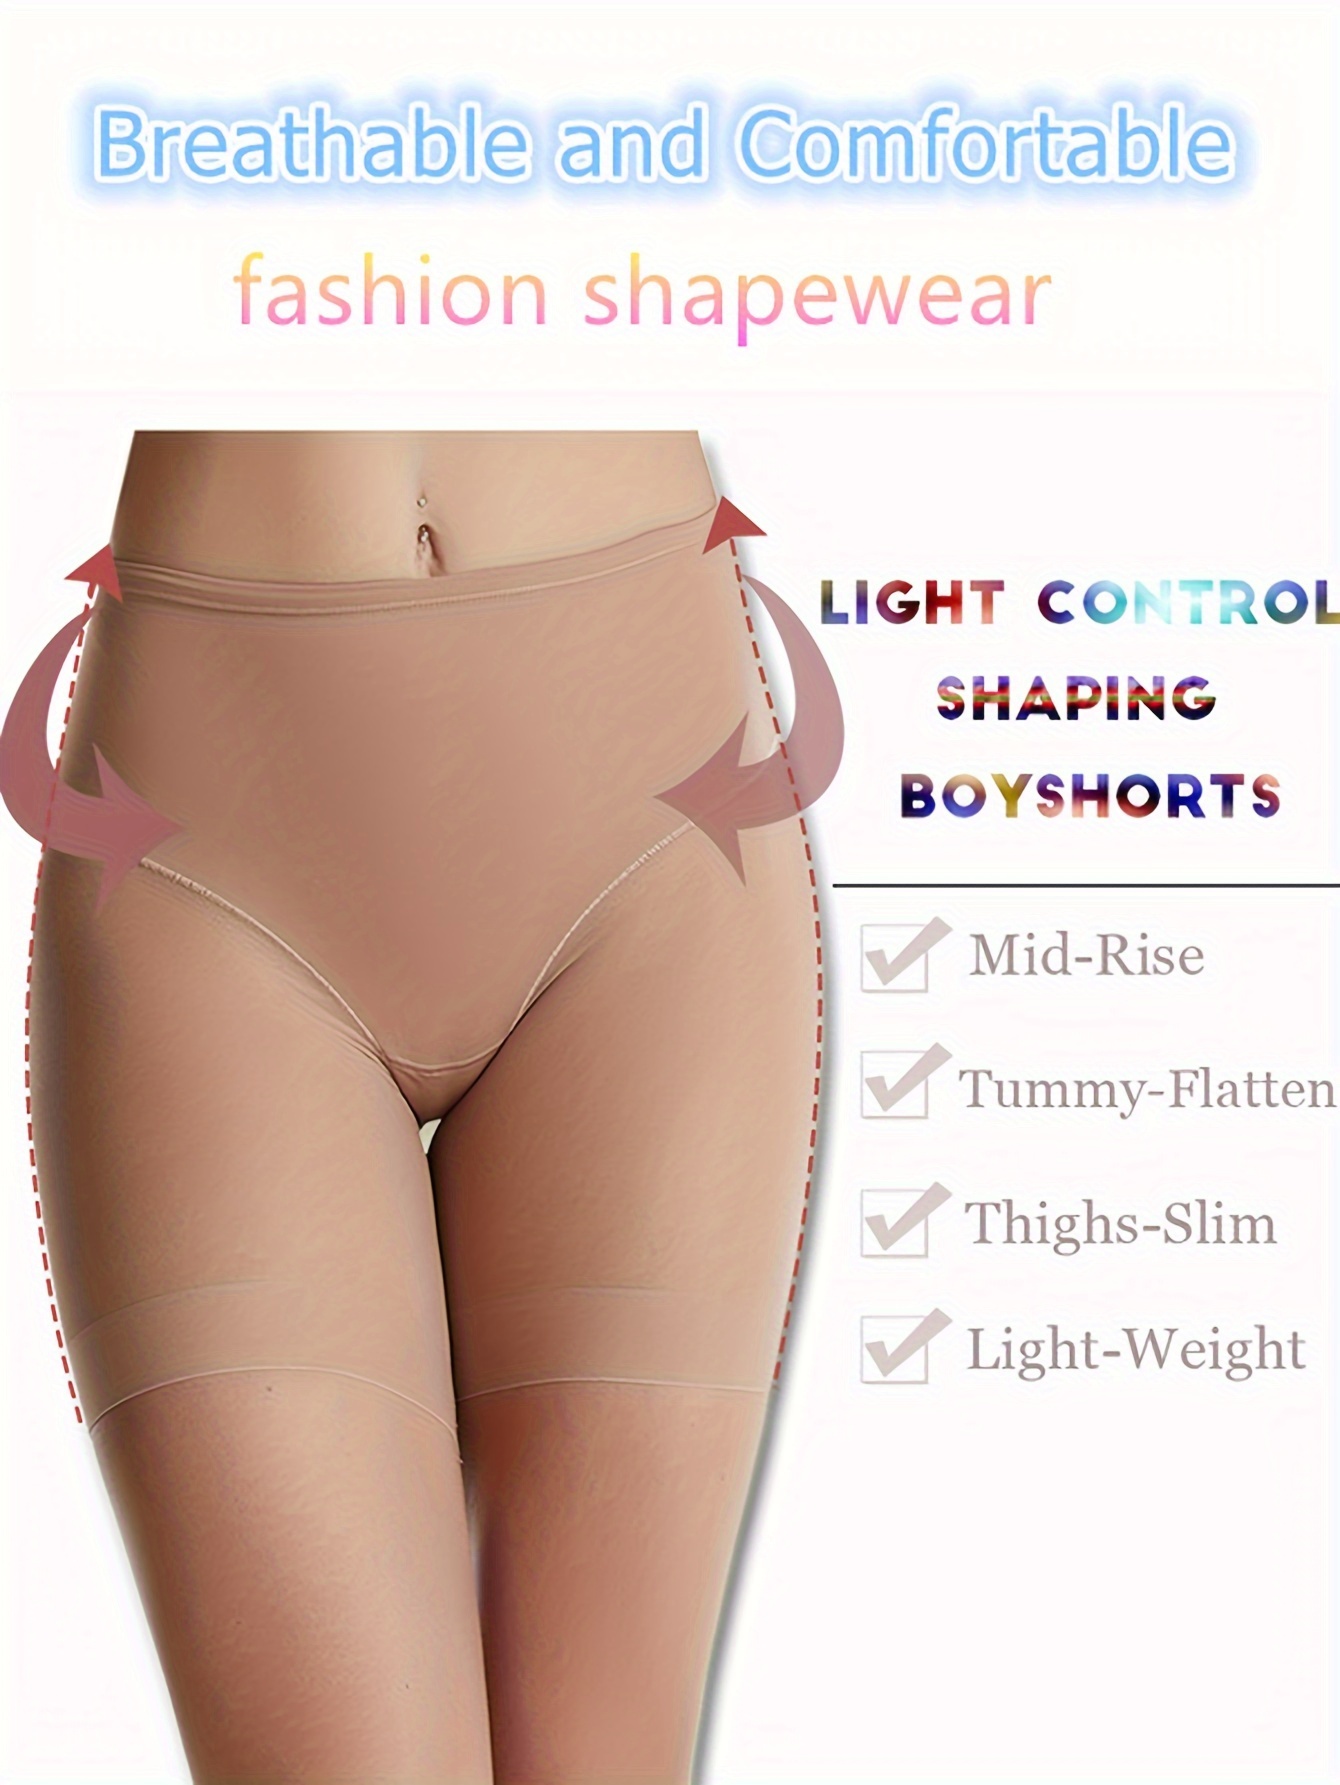 Women Bodyshorts Light Weight Slimmer Shapewear, Tummy Control